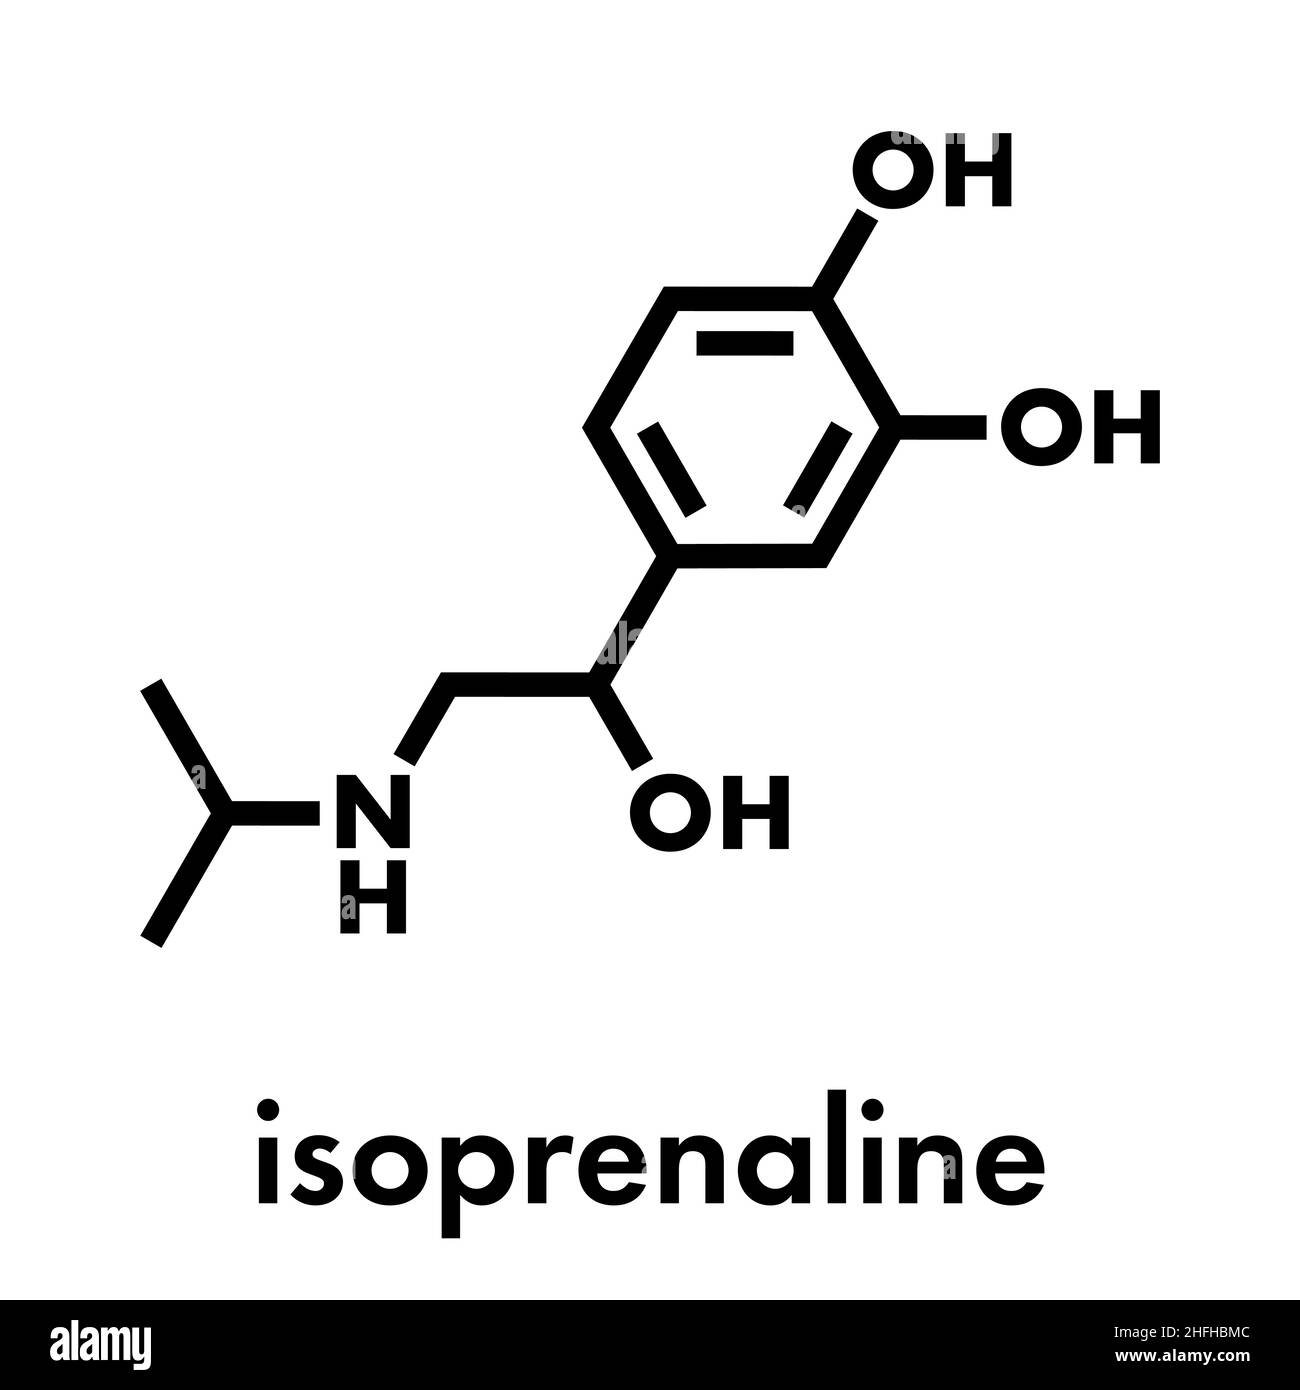 Isoprenaline (isoproterenol) drug molecule. Used in treatment of bradycardia, heart block and asthma. Skeletal formula. Stock Vector